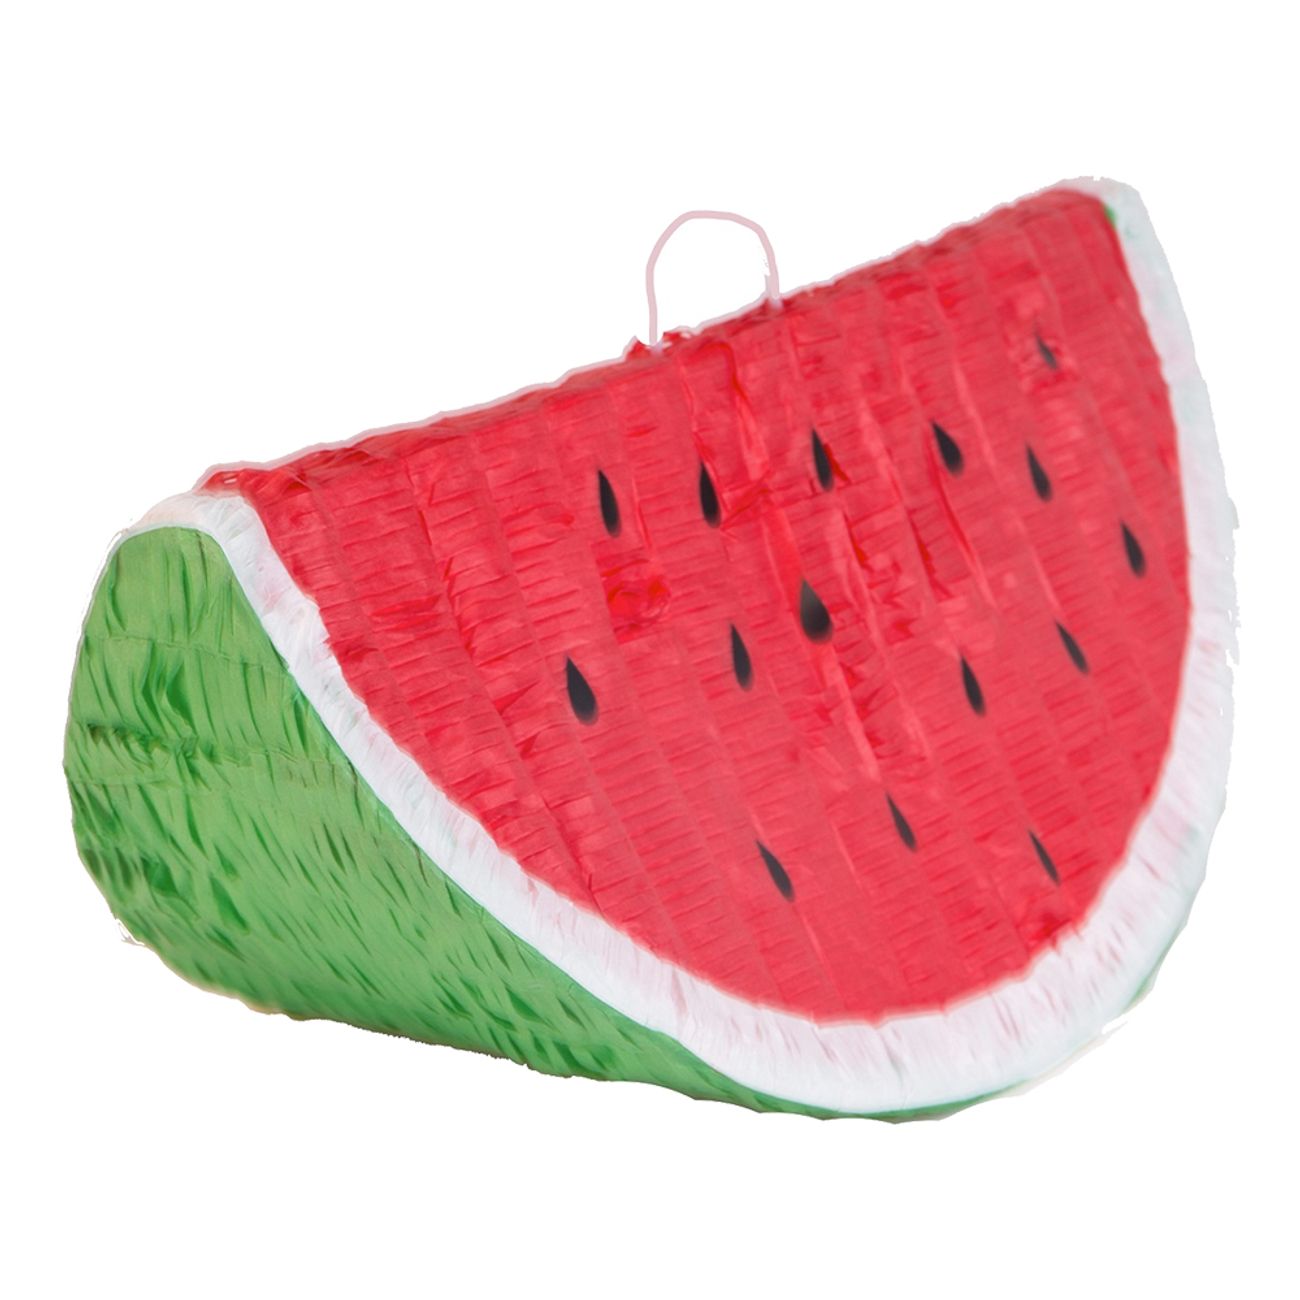 pinata-vattenmelon-1